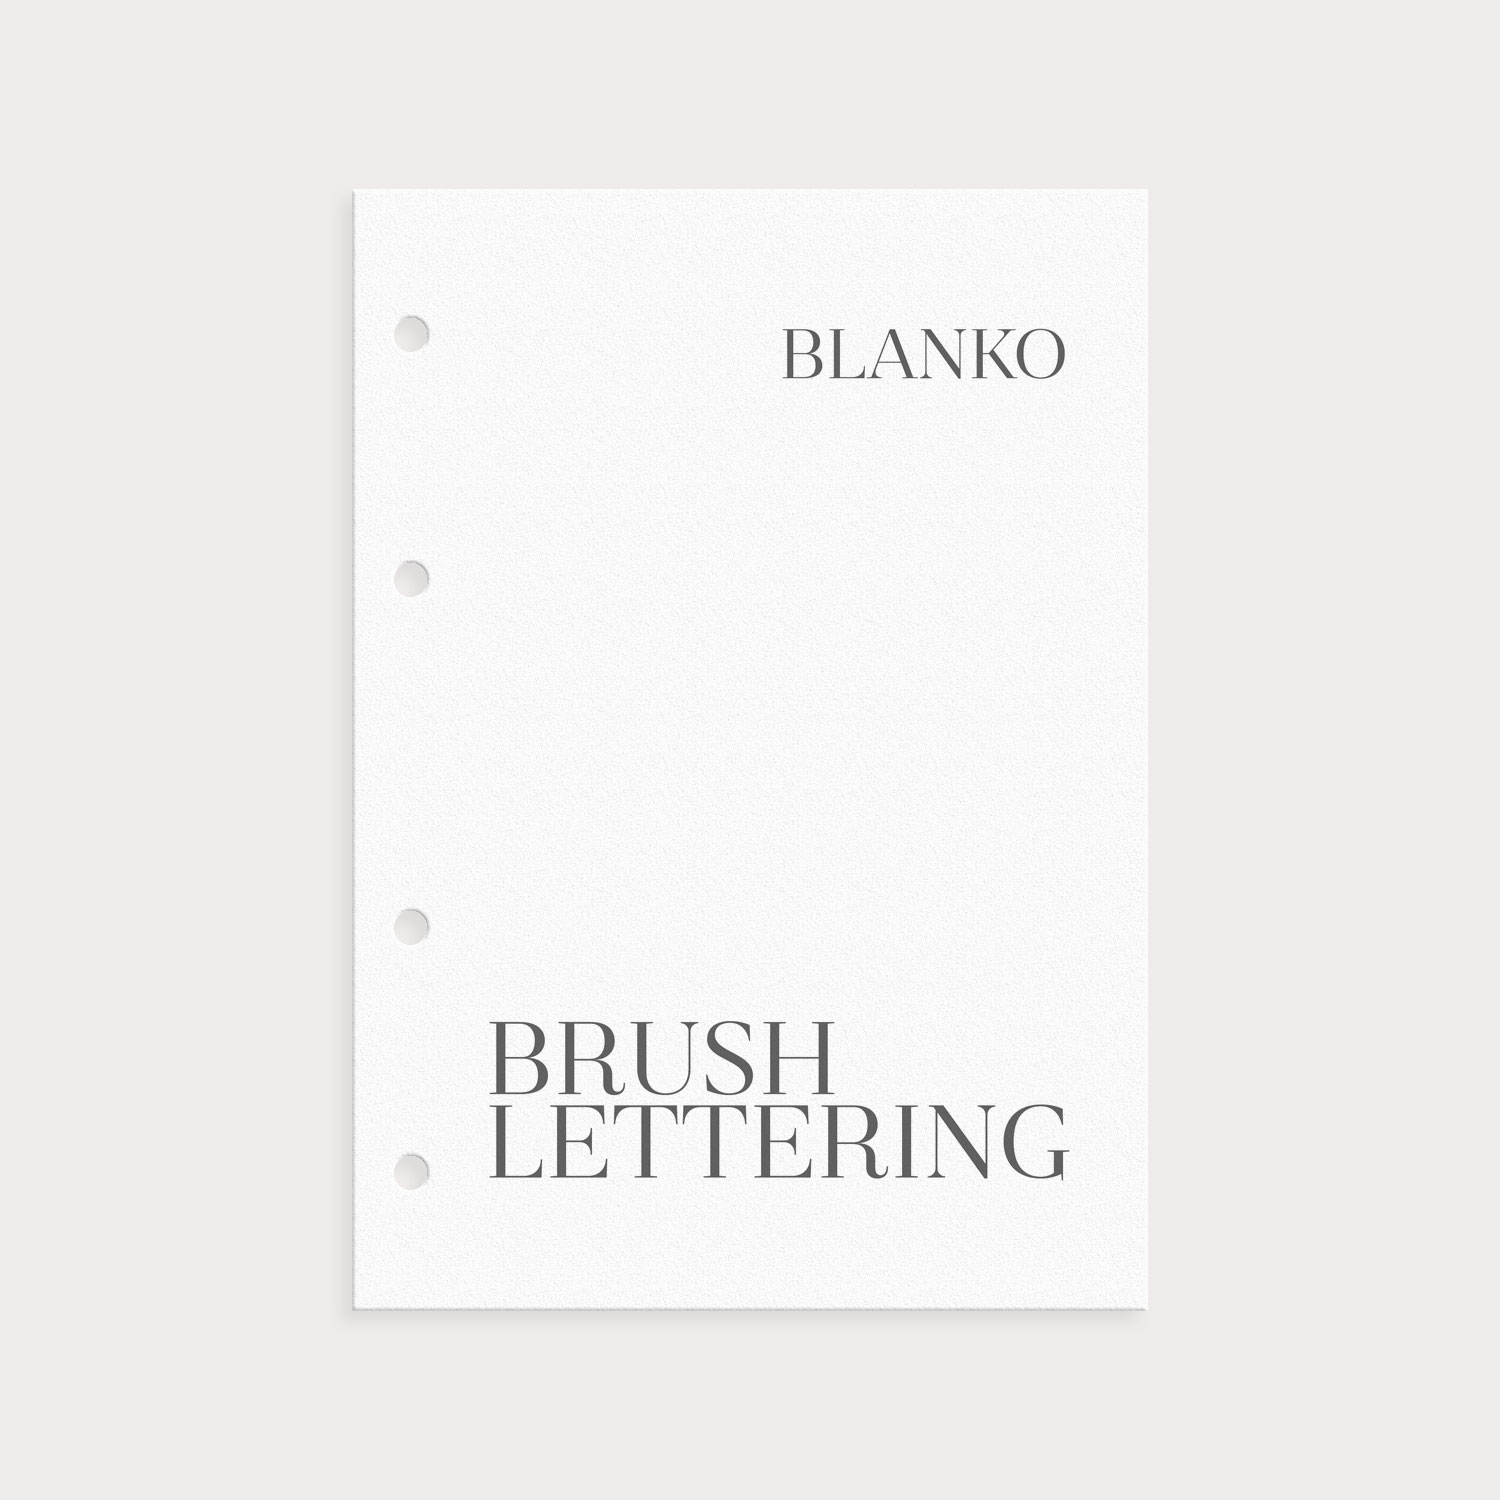 Brushlettering Blanko Papier zum Üben